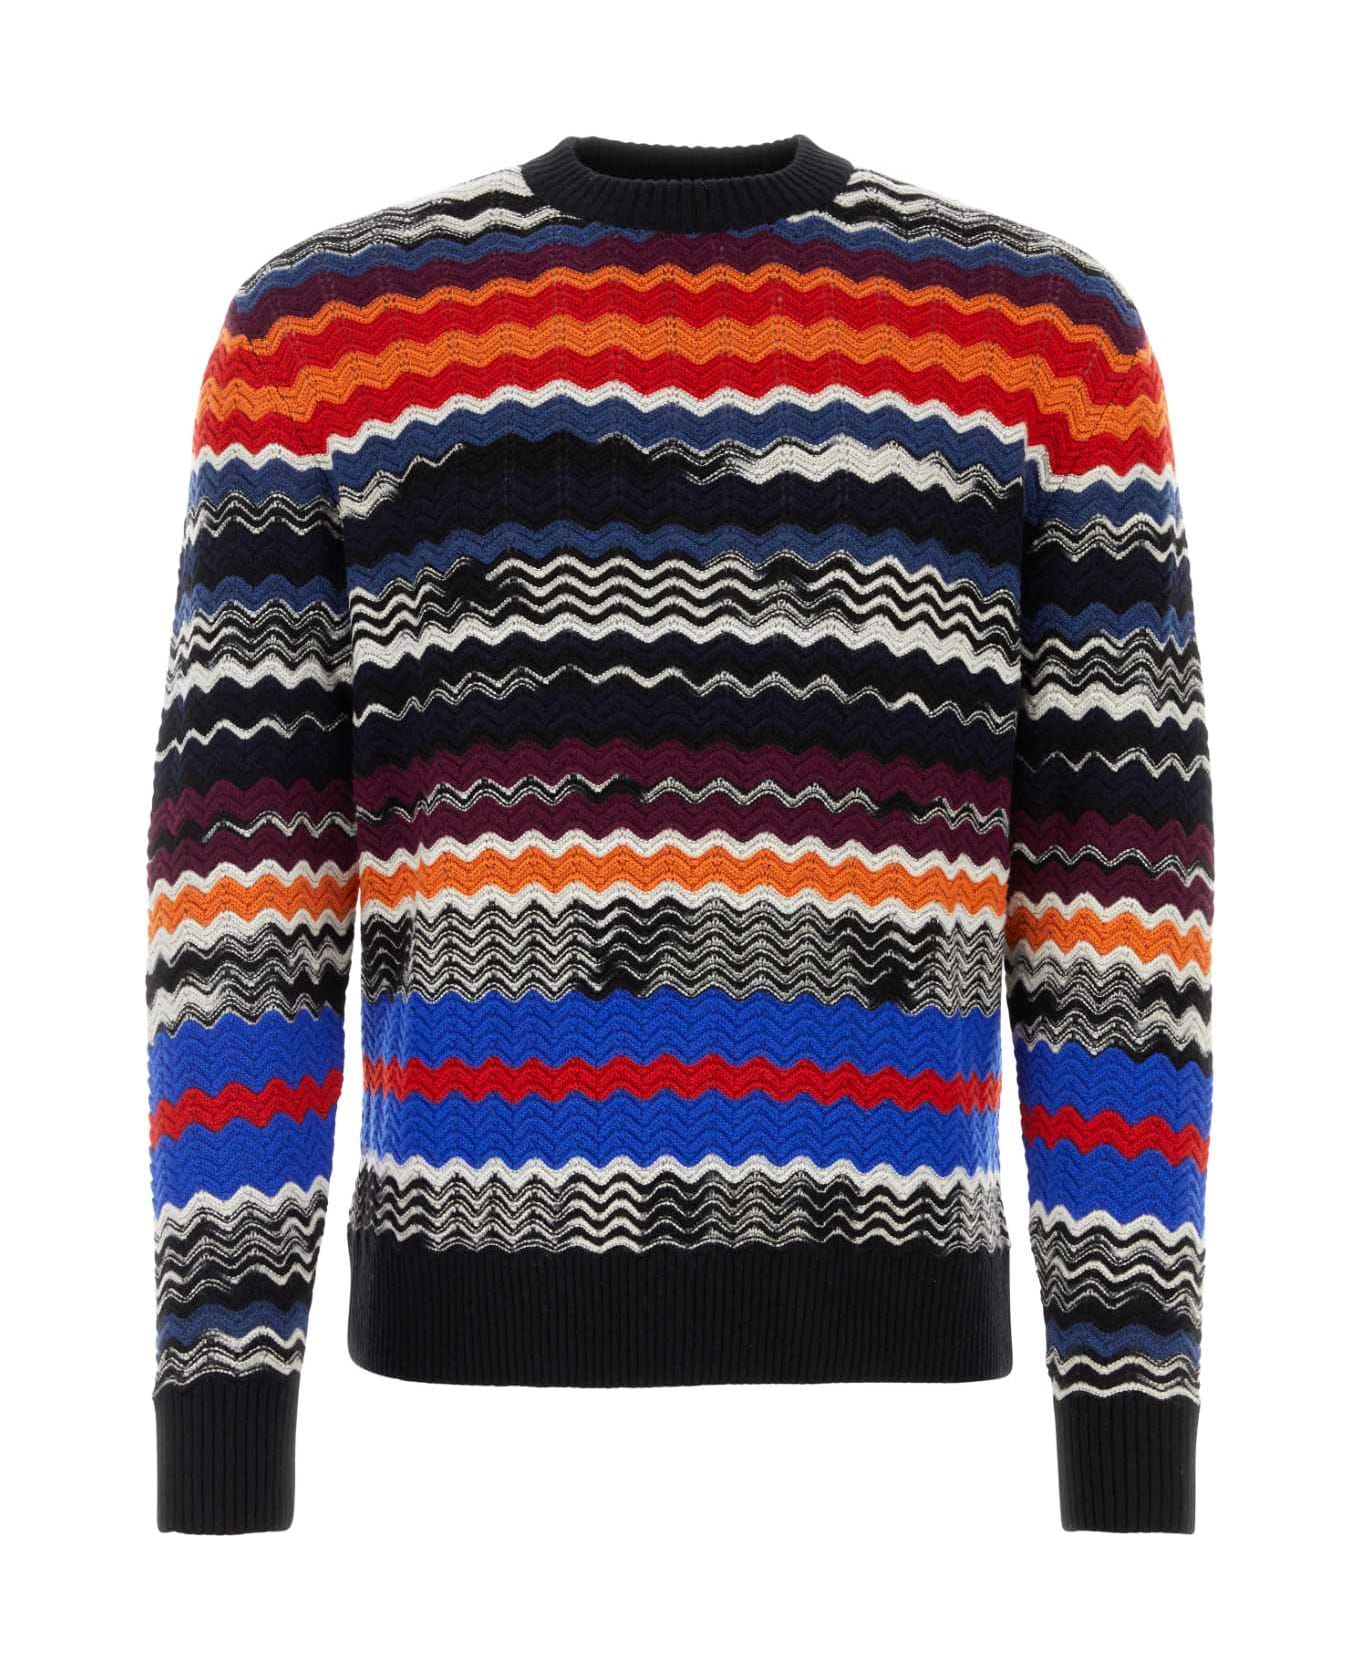 Missoni Embroidered Stretch Wool Blend Sweater - ORANGEBLACKREDBLUEWHITE